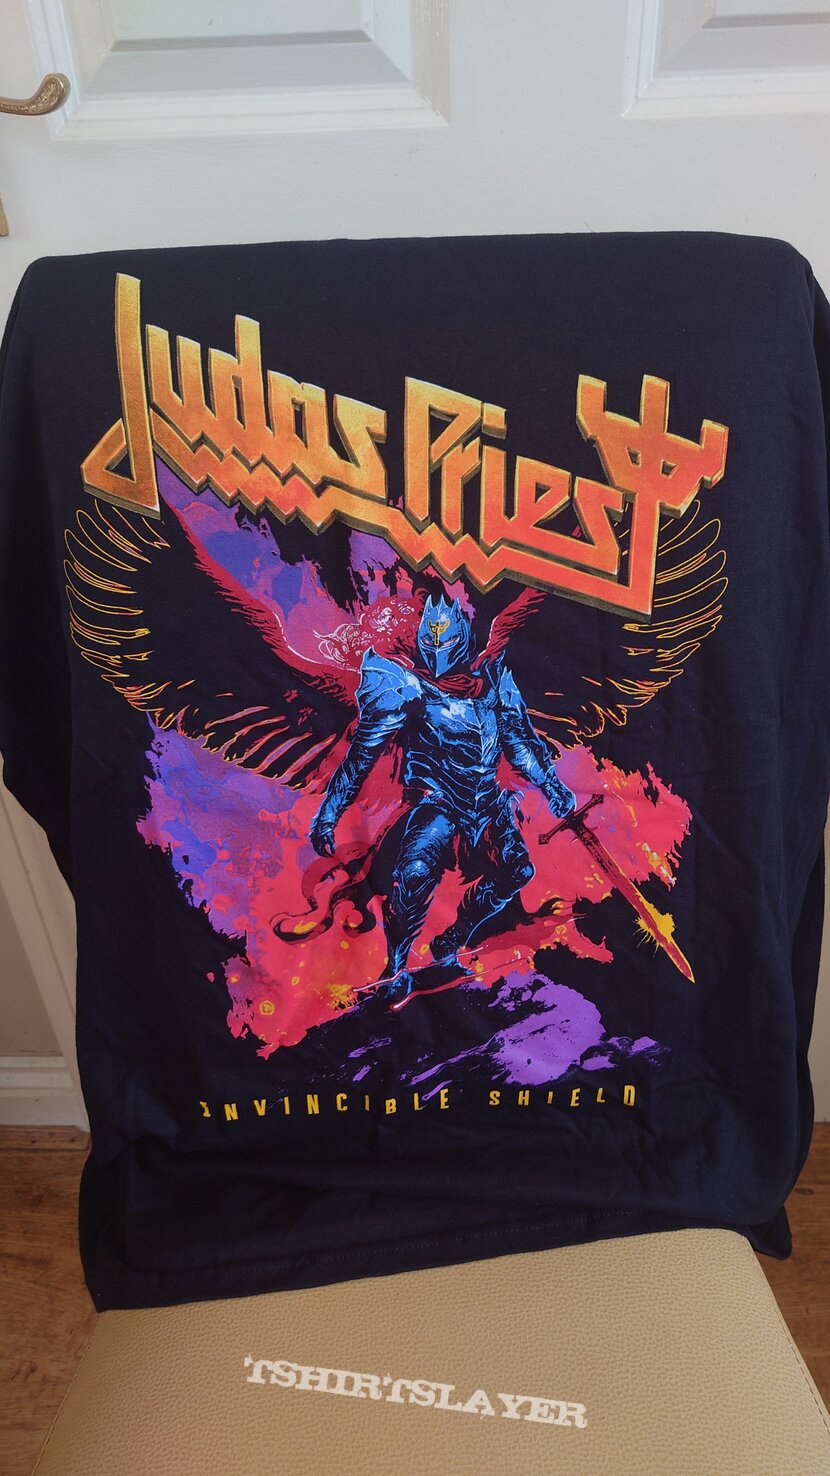 Judas Priest Invincible Shield 